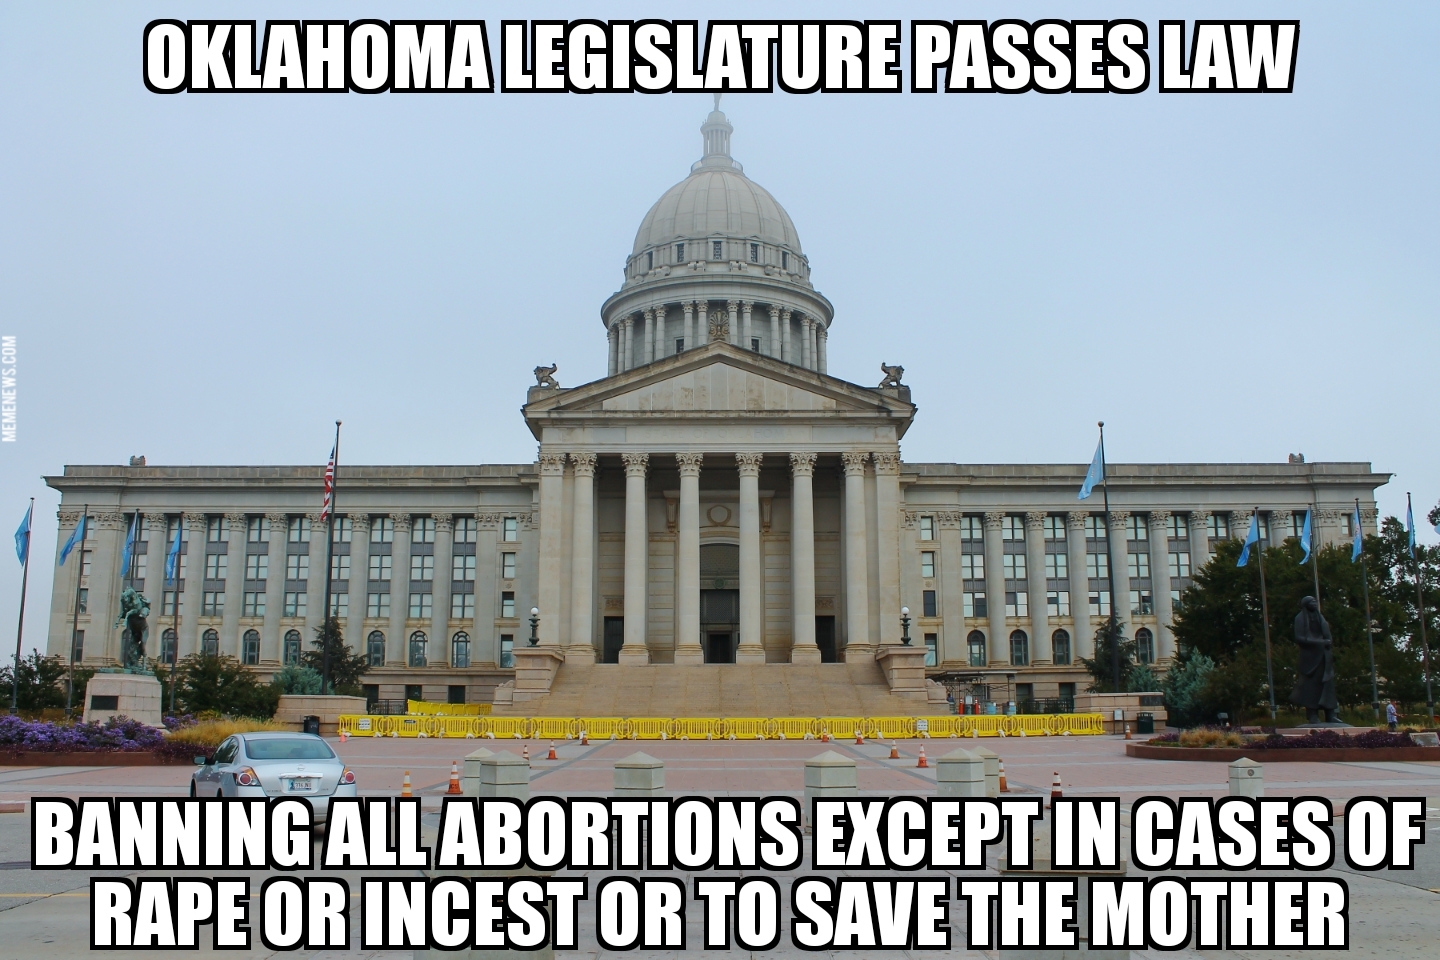 Oklahoma bans most abortions